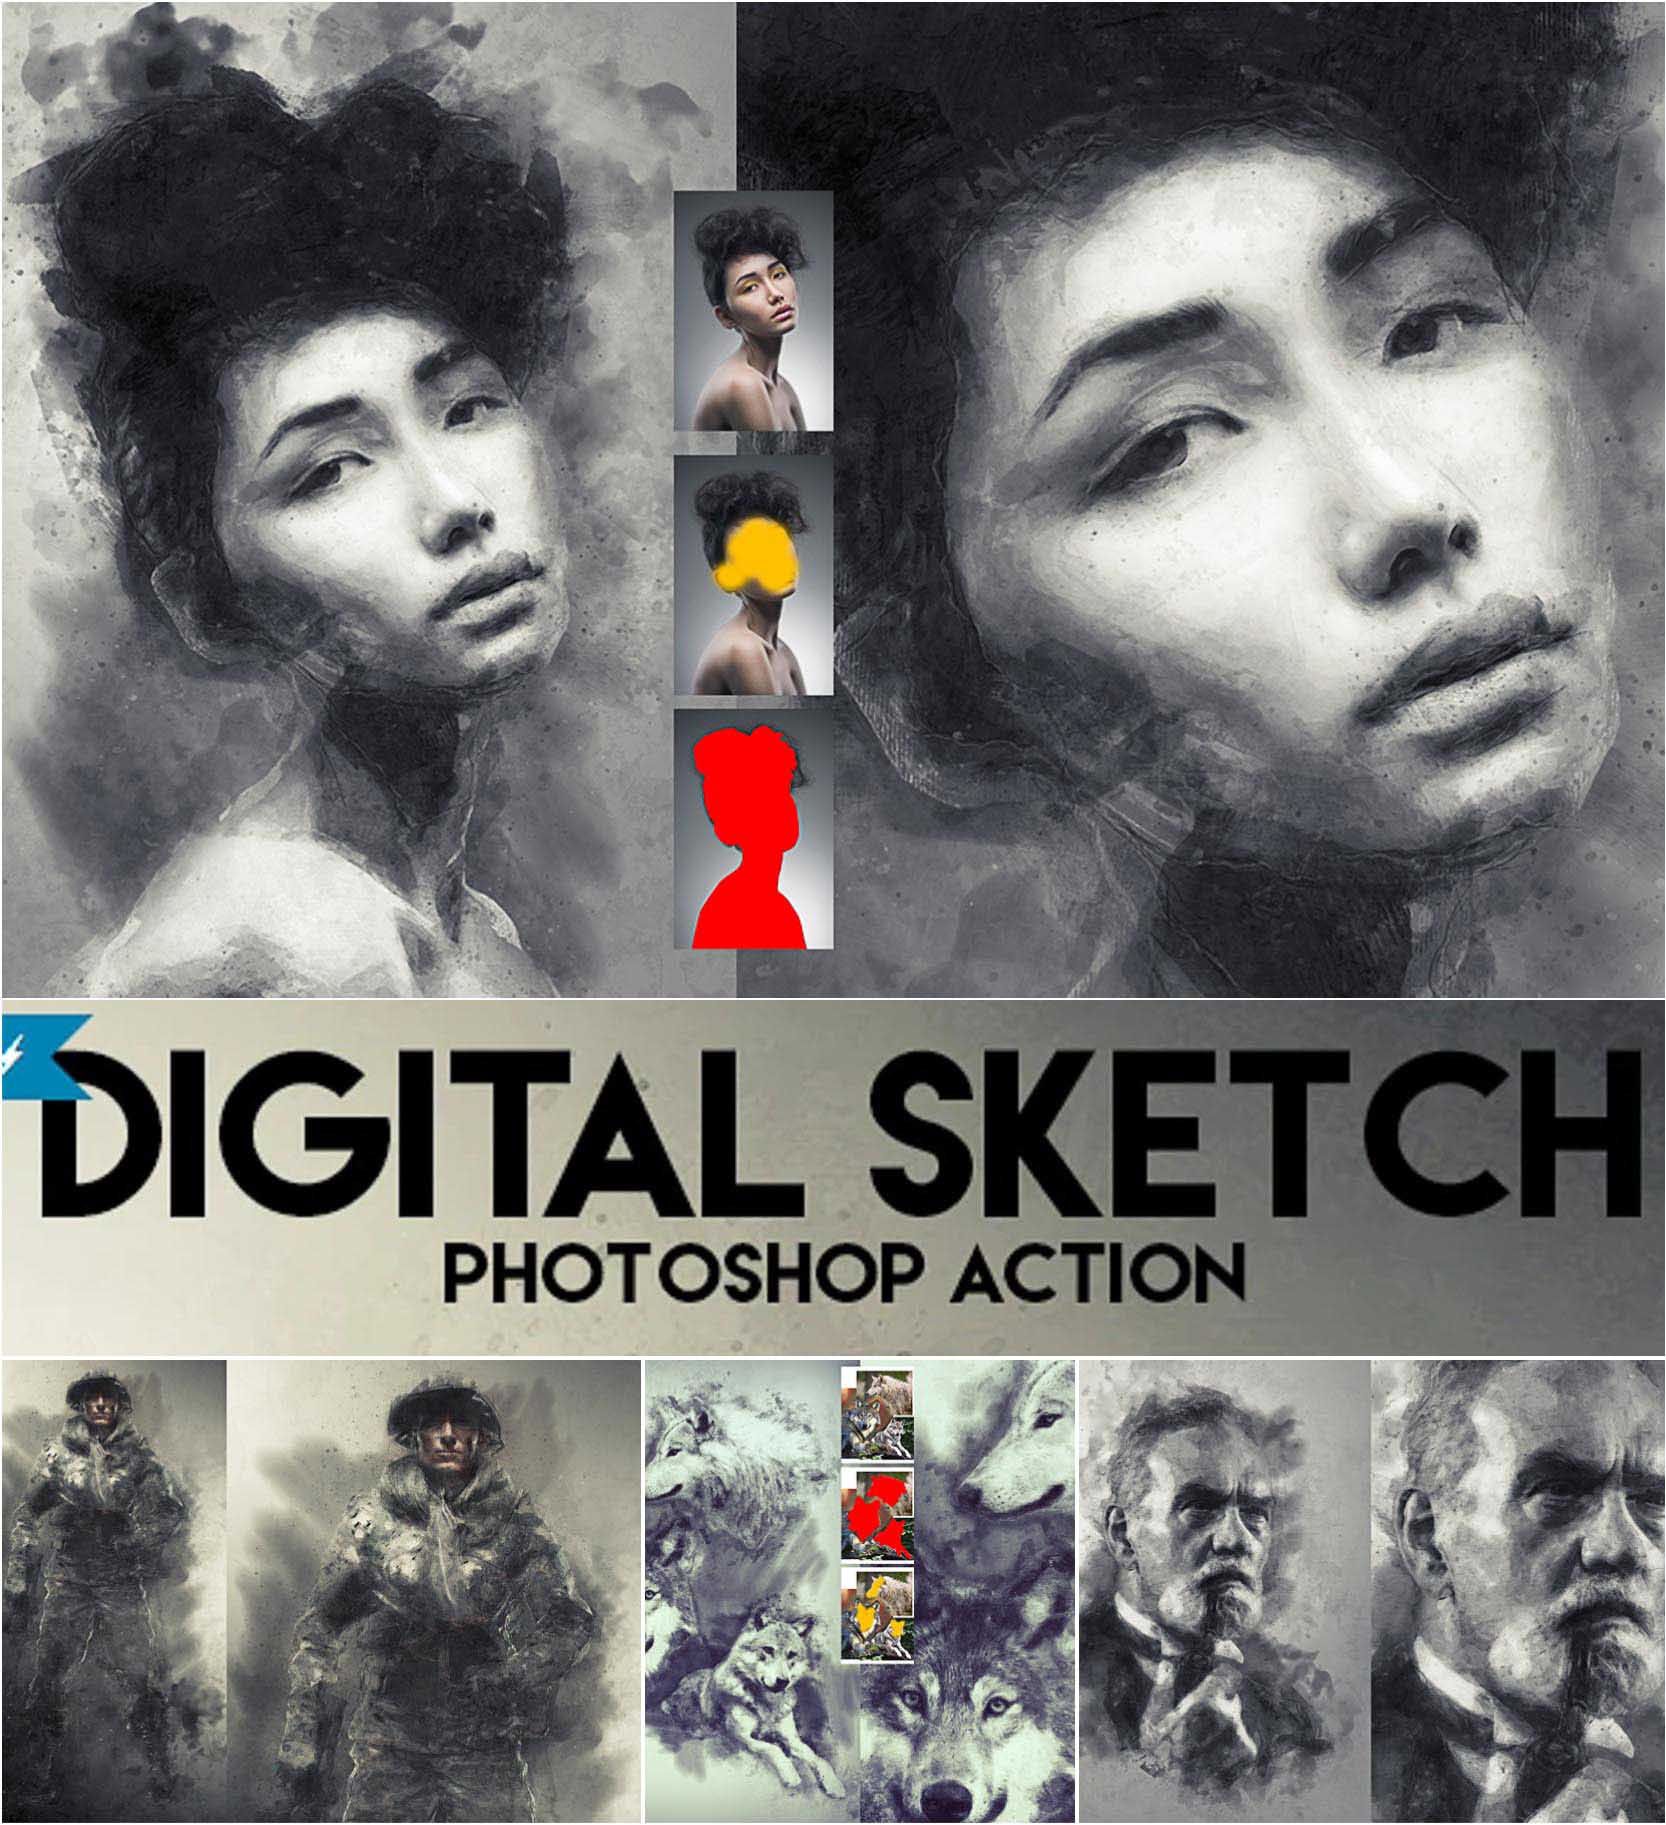 Digital Sketch Photoshop Action